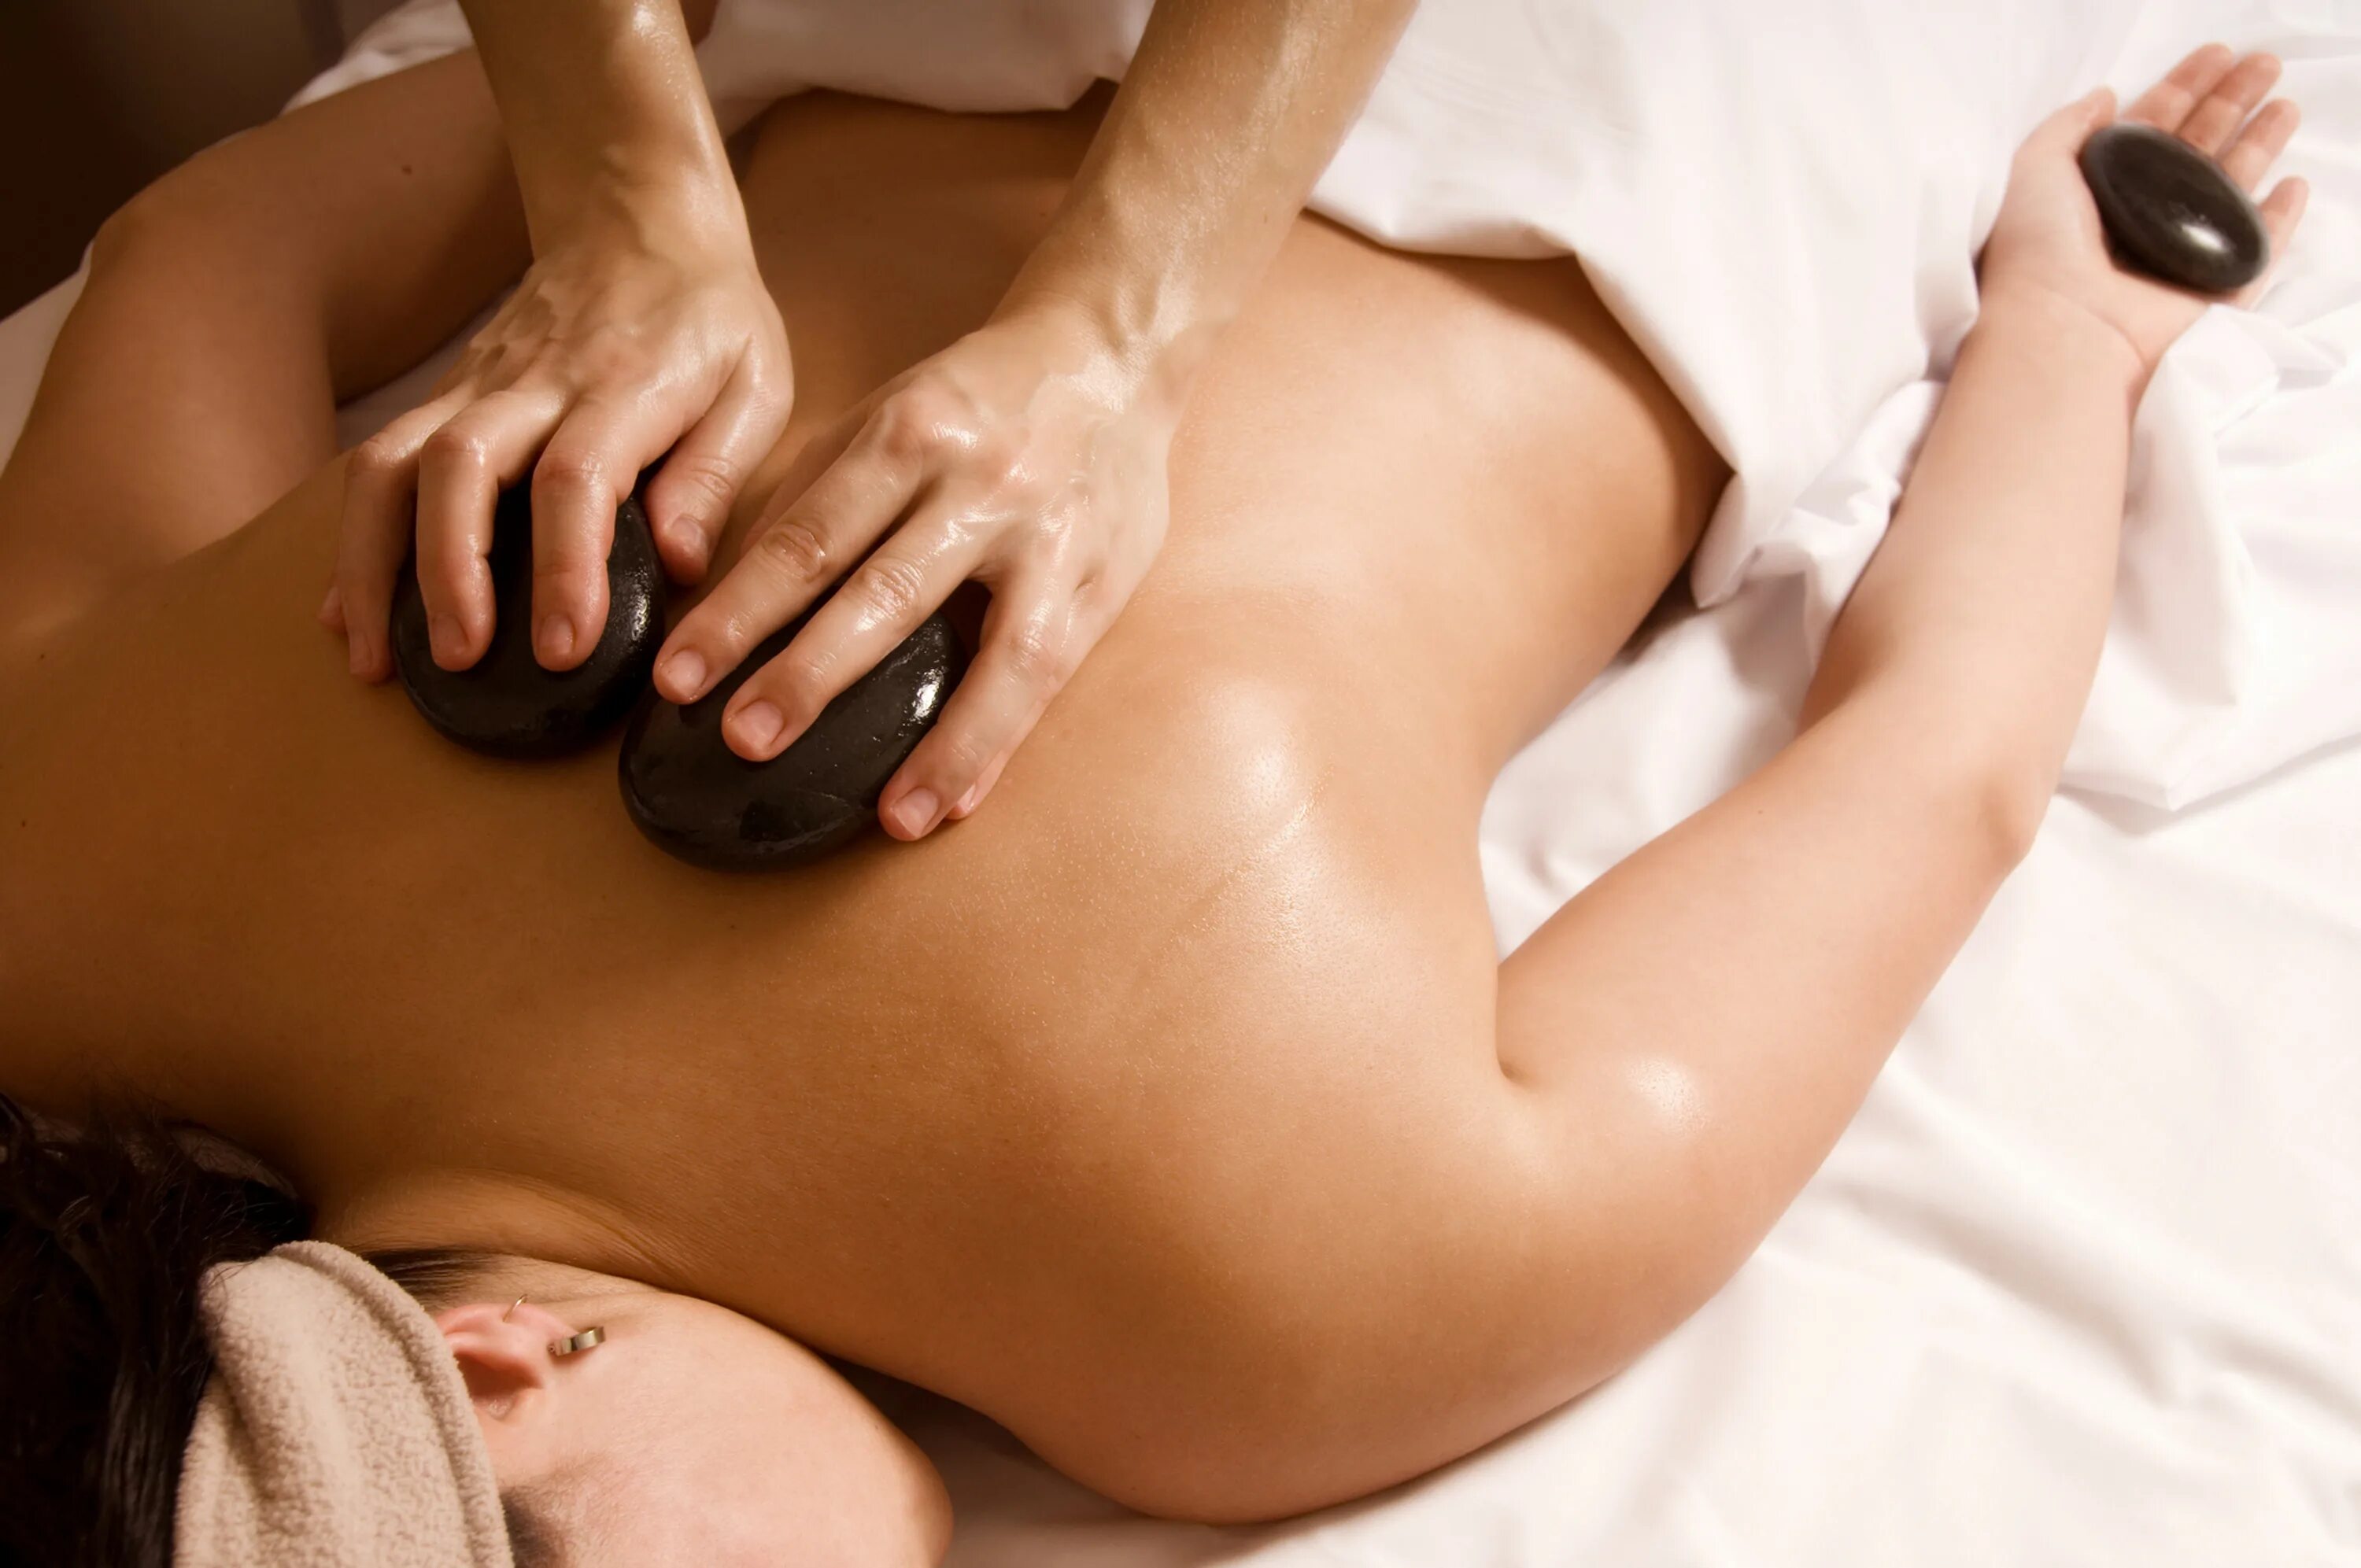 Hot massage video. Массаж горячими камнями. Стоун - терапия.. Массаж горячими камнями (Stone massage). Тайский Стоун массаж. Горячие камни для массажа.